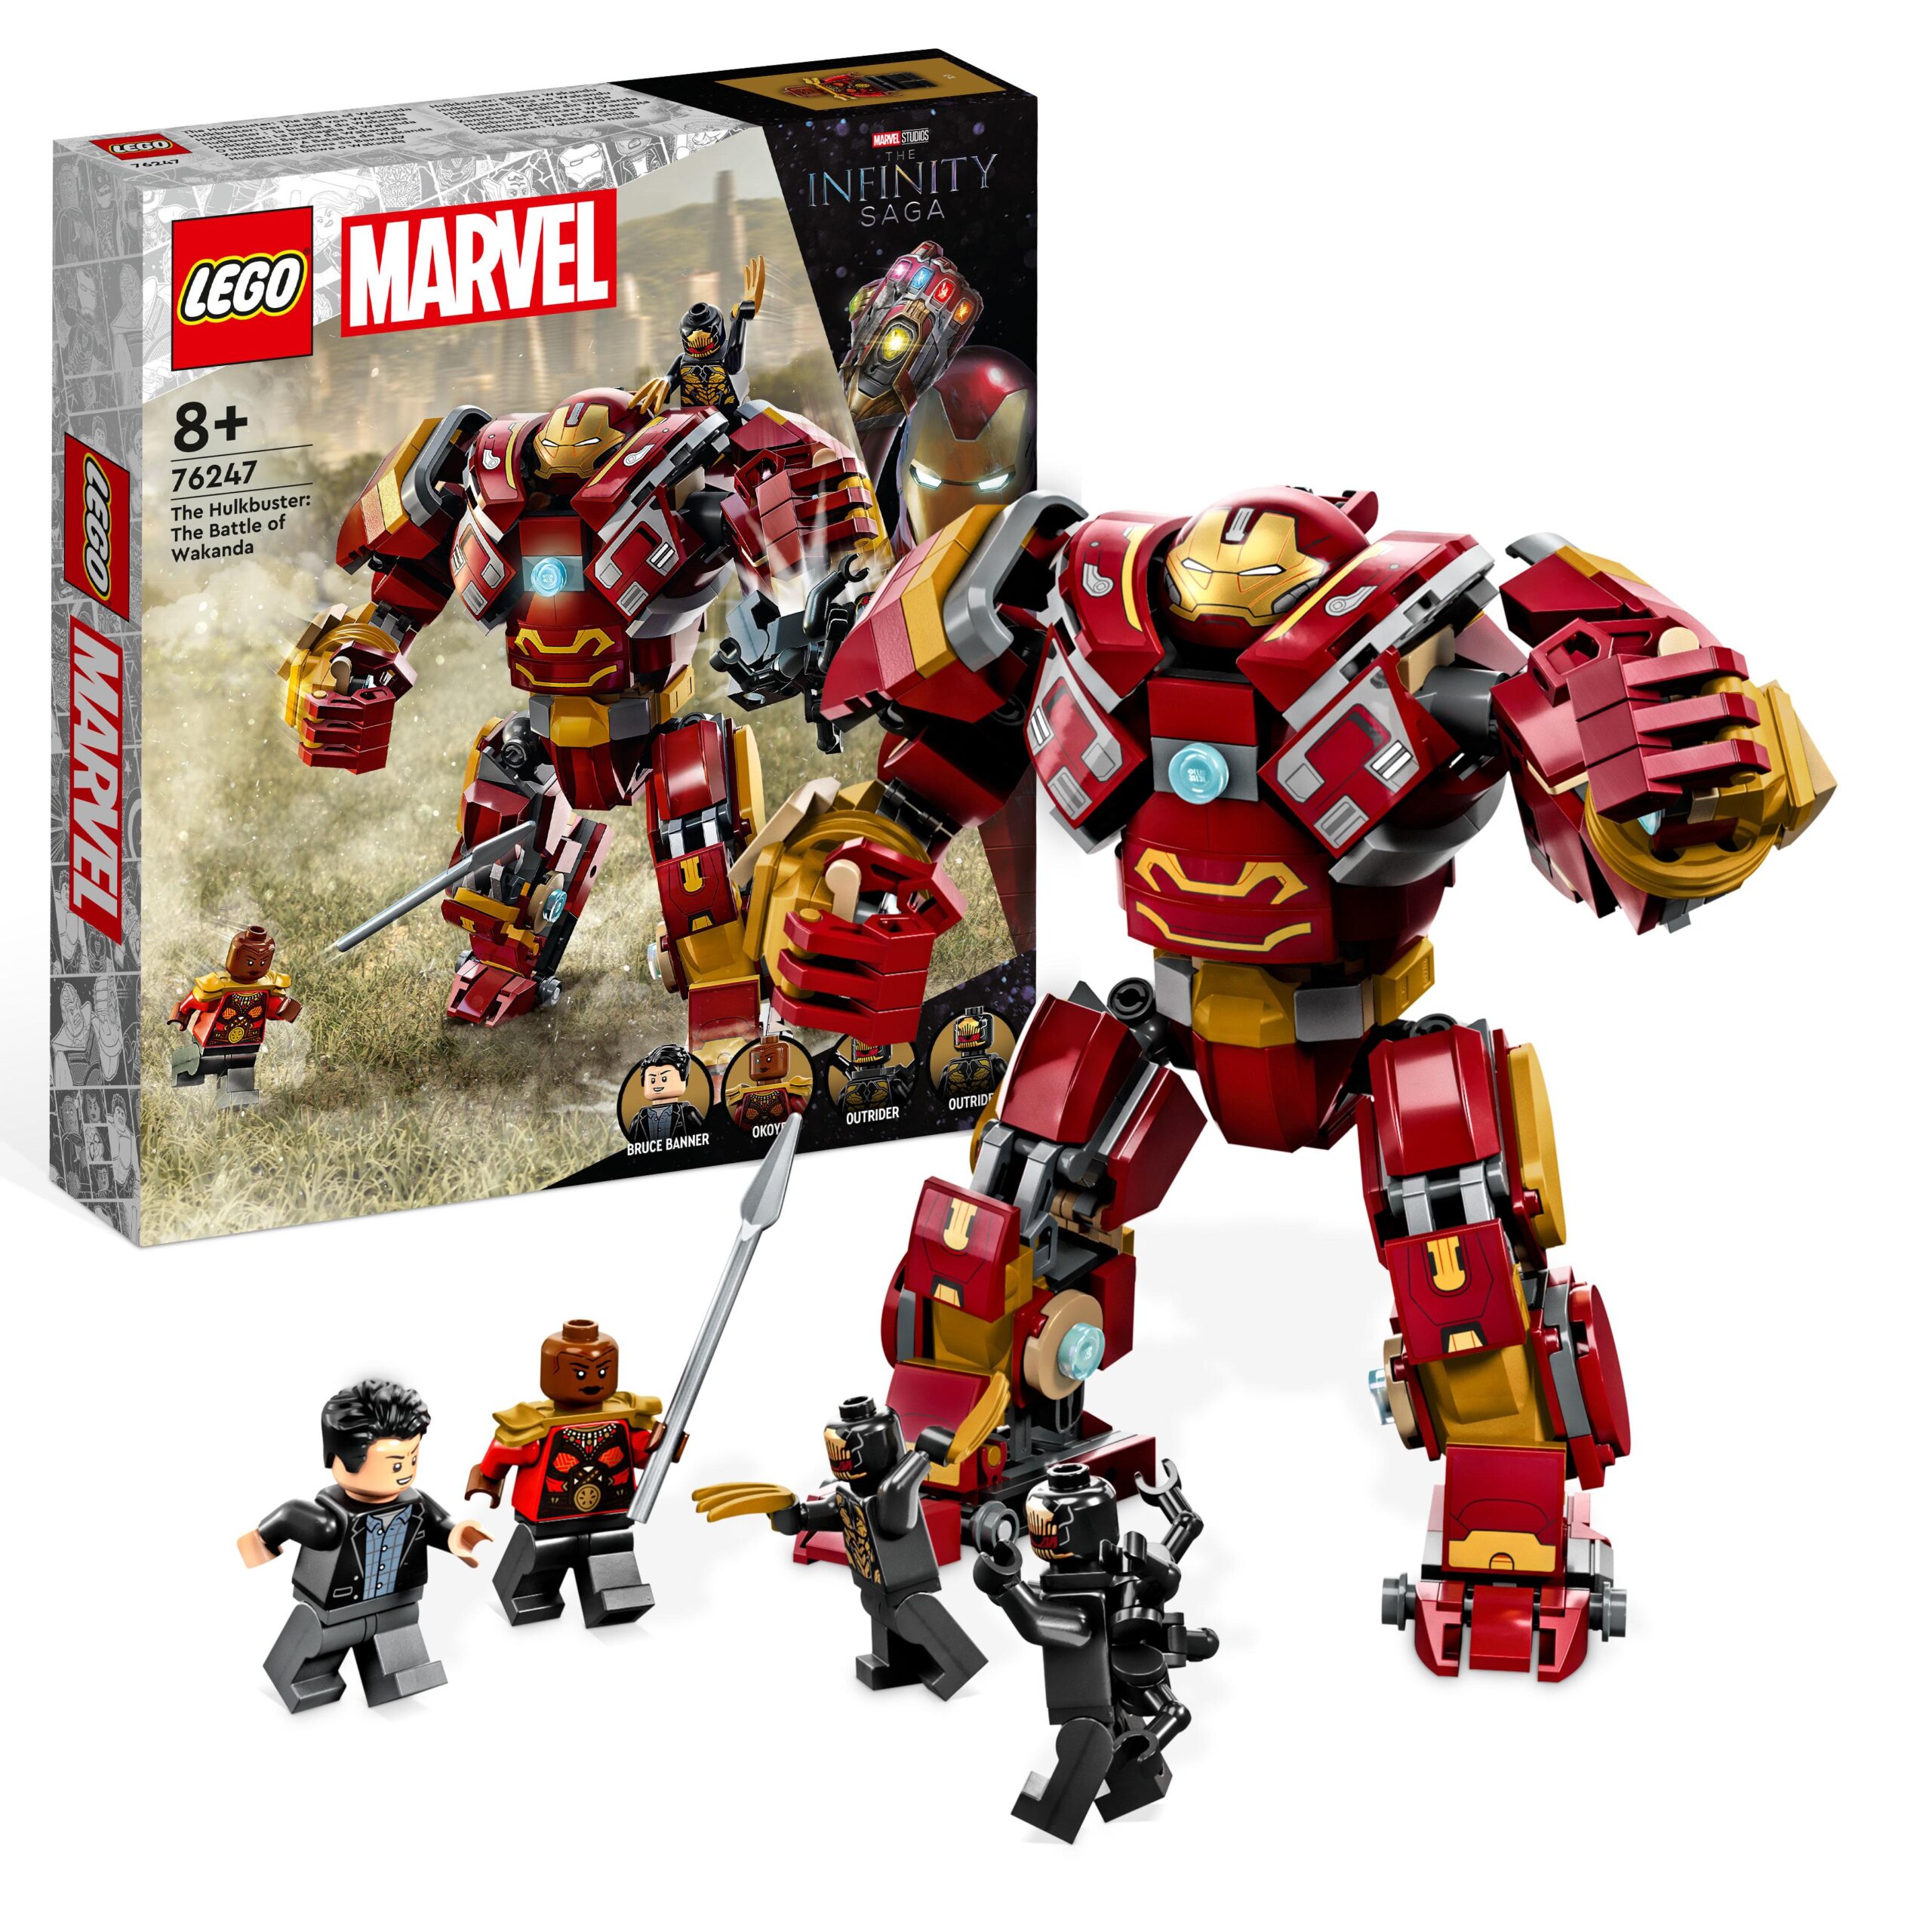 Lego marvel 76247 hulkbuster: la battaglia di wakanda, action figure mech di hulk, avengers: infinity war, giochi per bambini - LEGO SUPER HEROES, Avengers